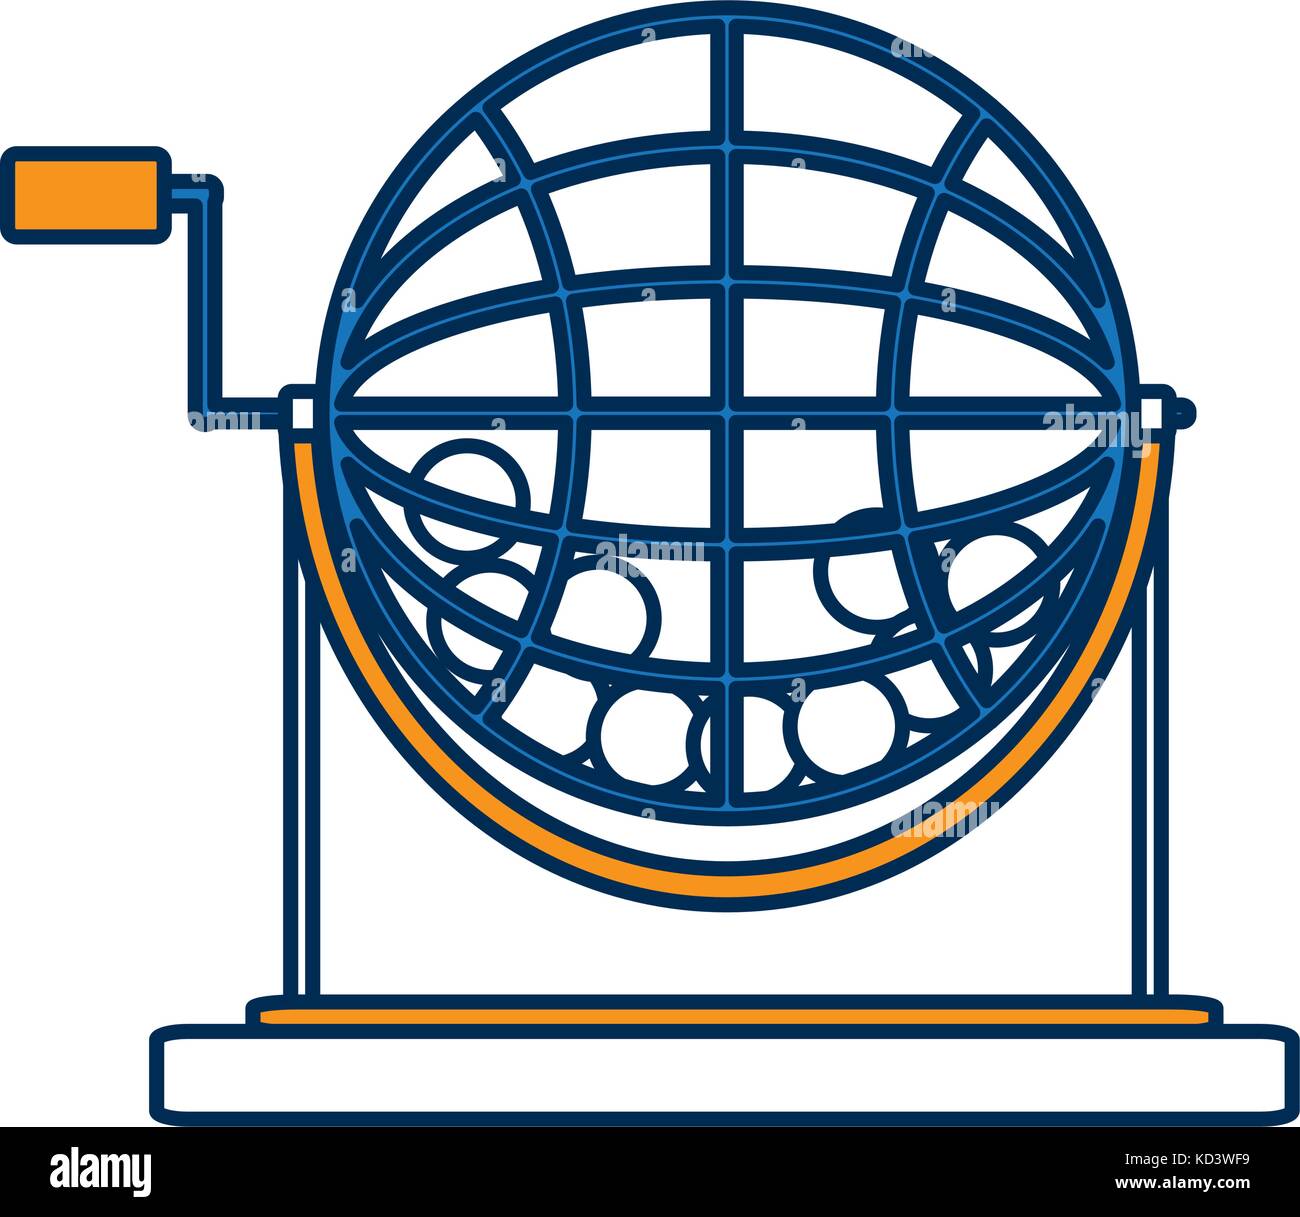 lottery wheel icon Stock Vector